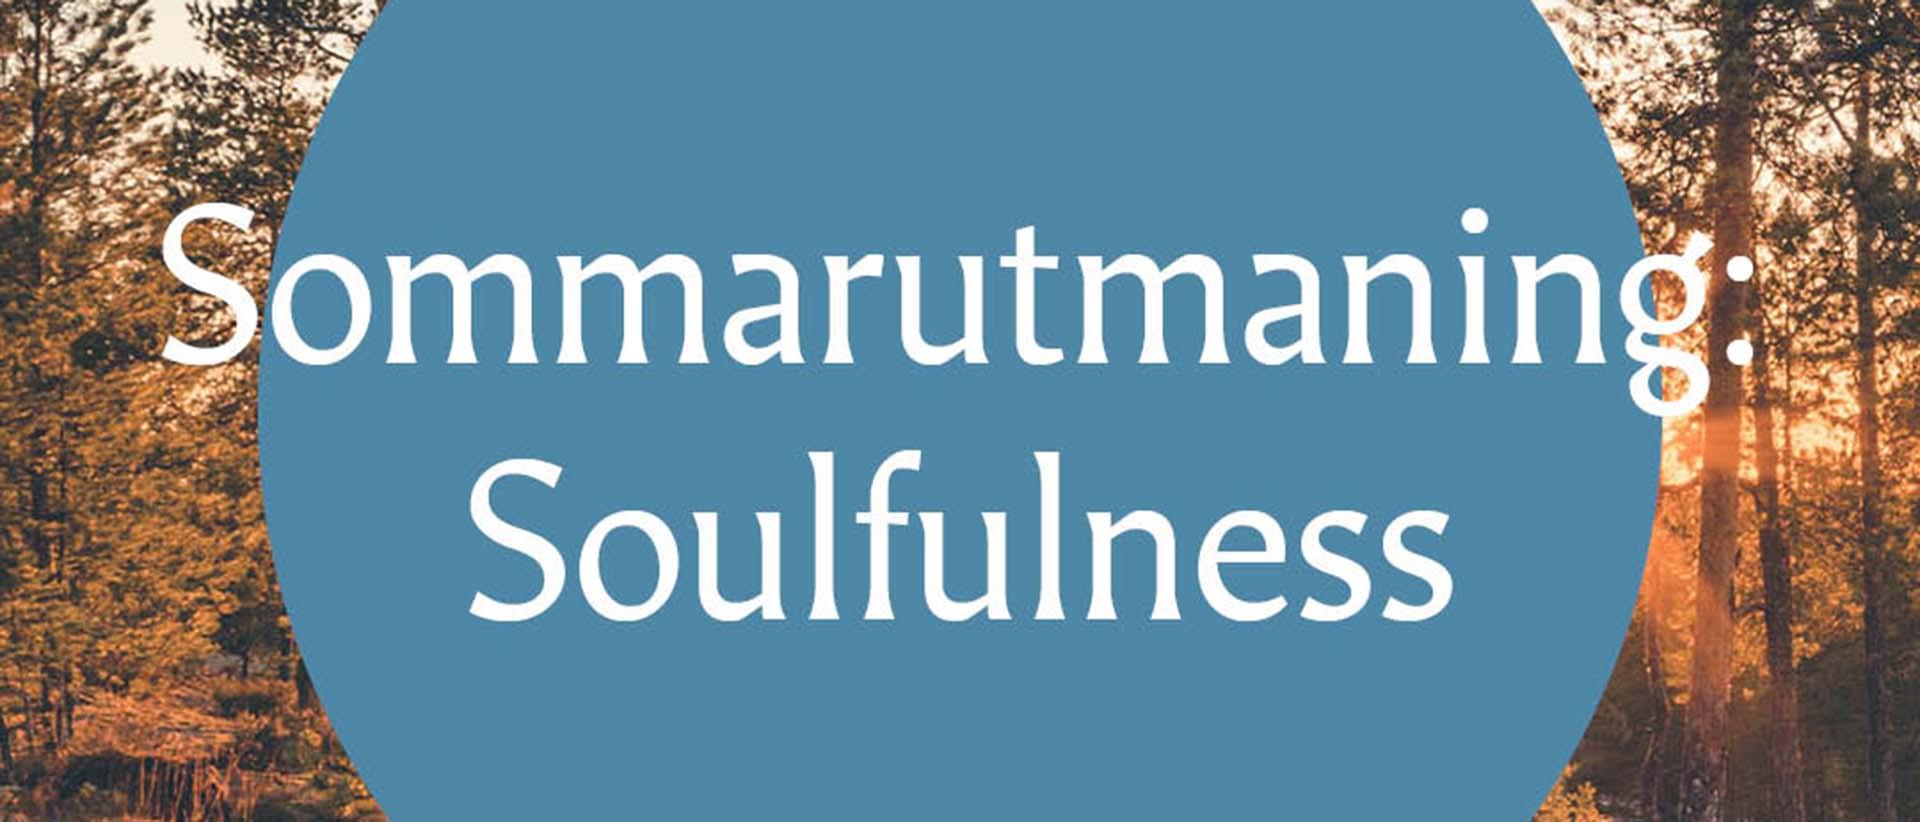 Sommarutmaning: Soulfulness